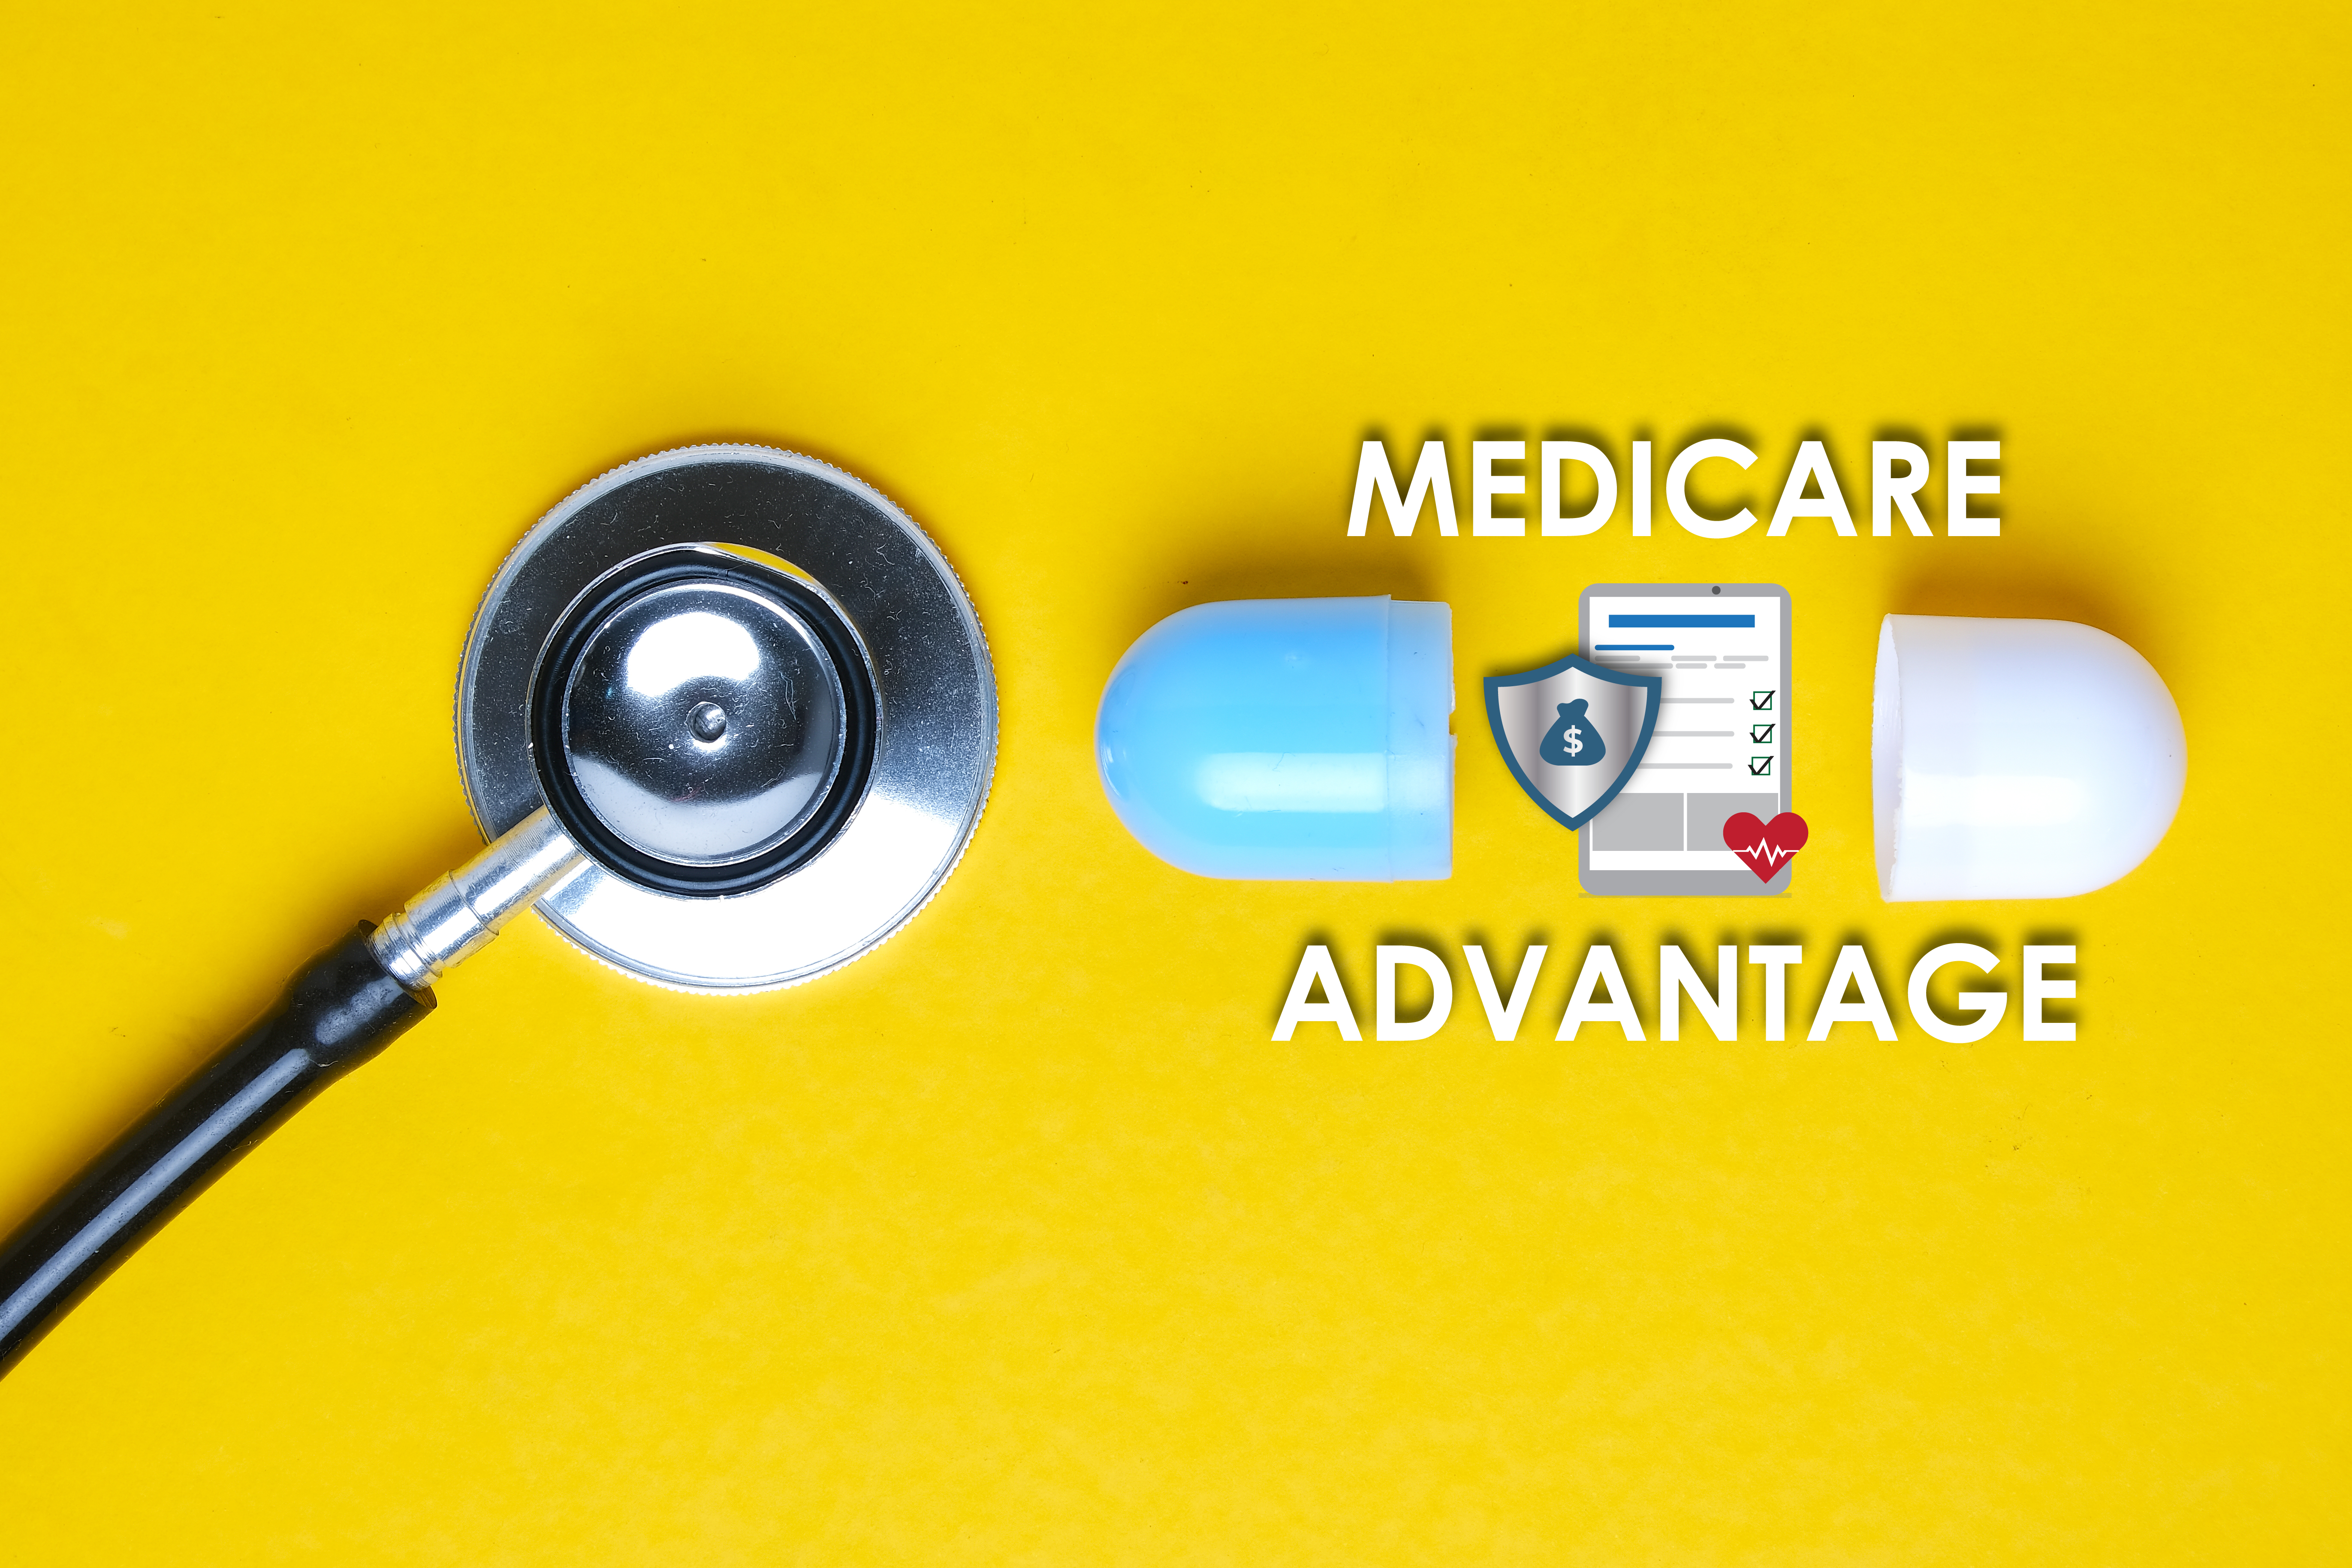 Medicare Advantage image